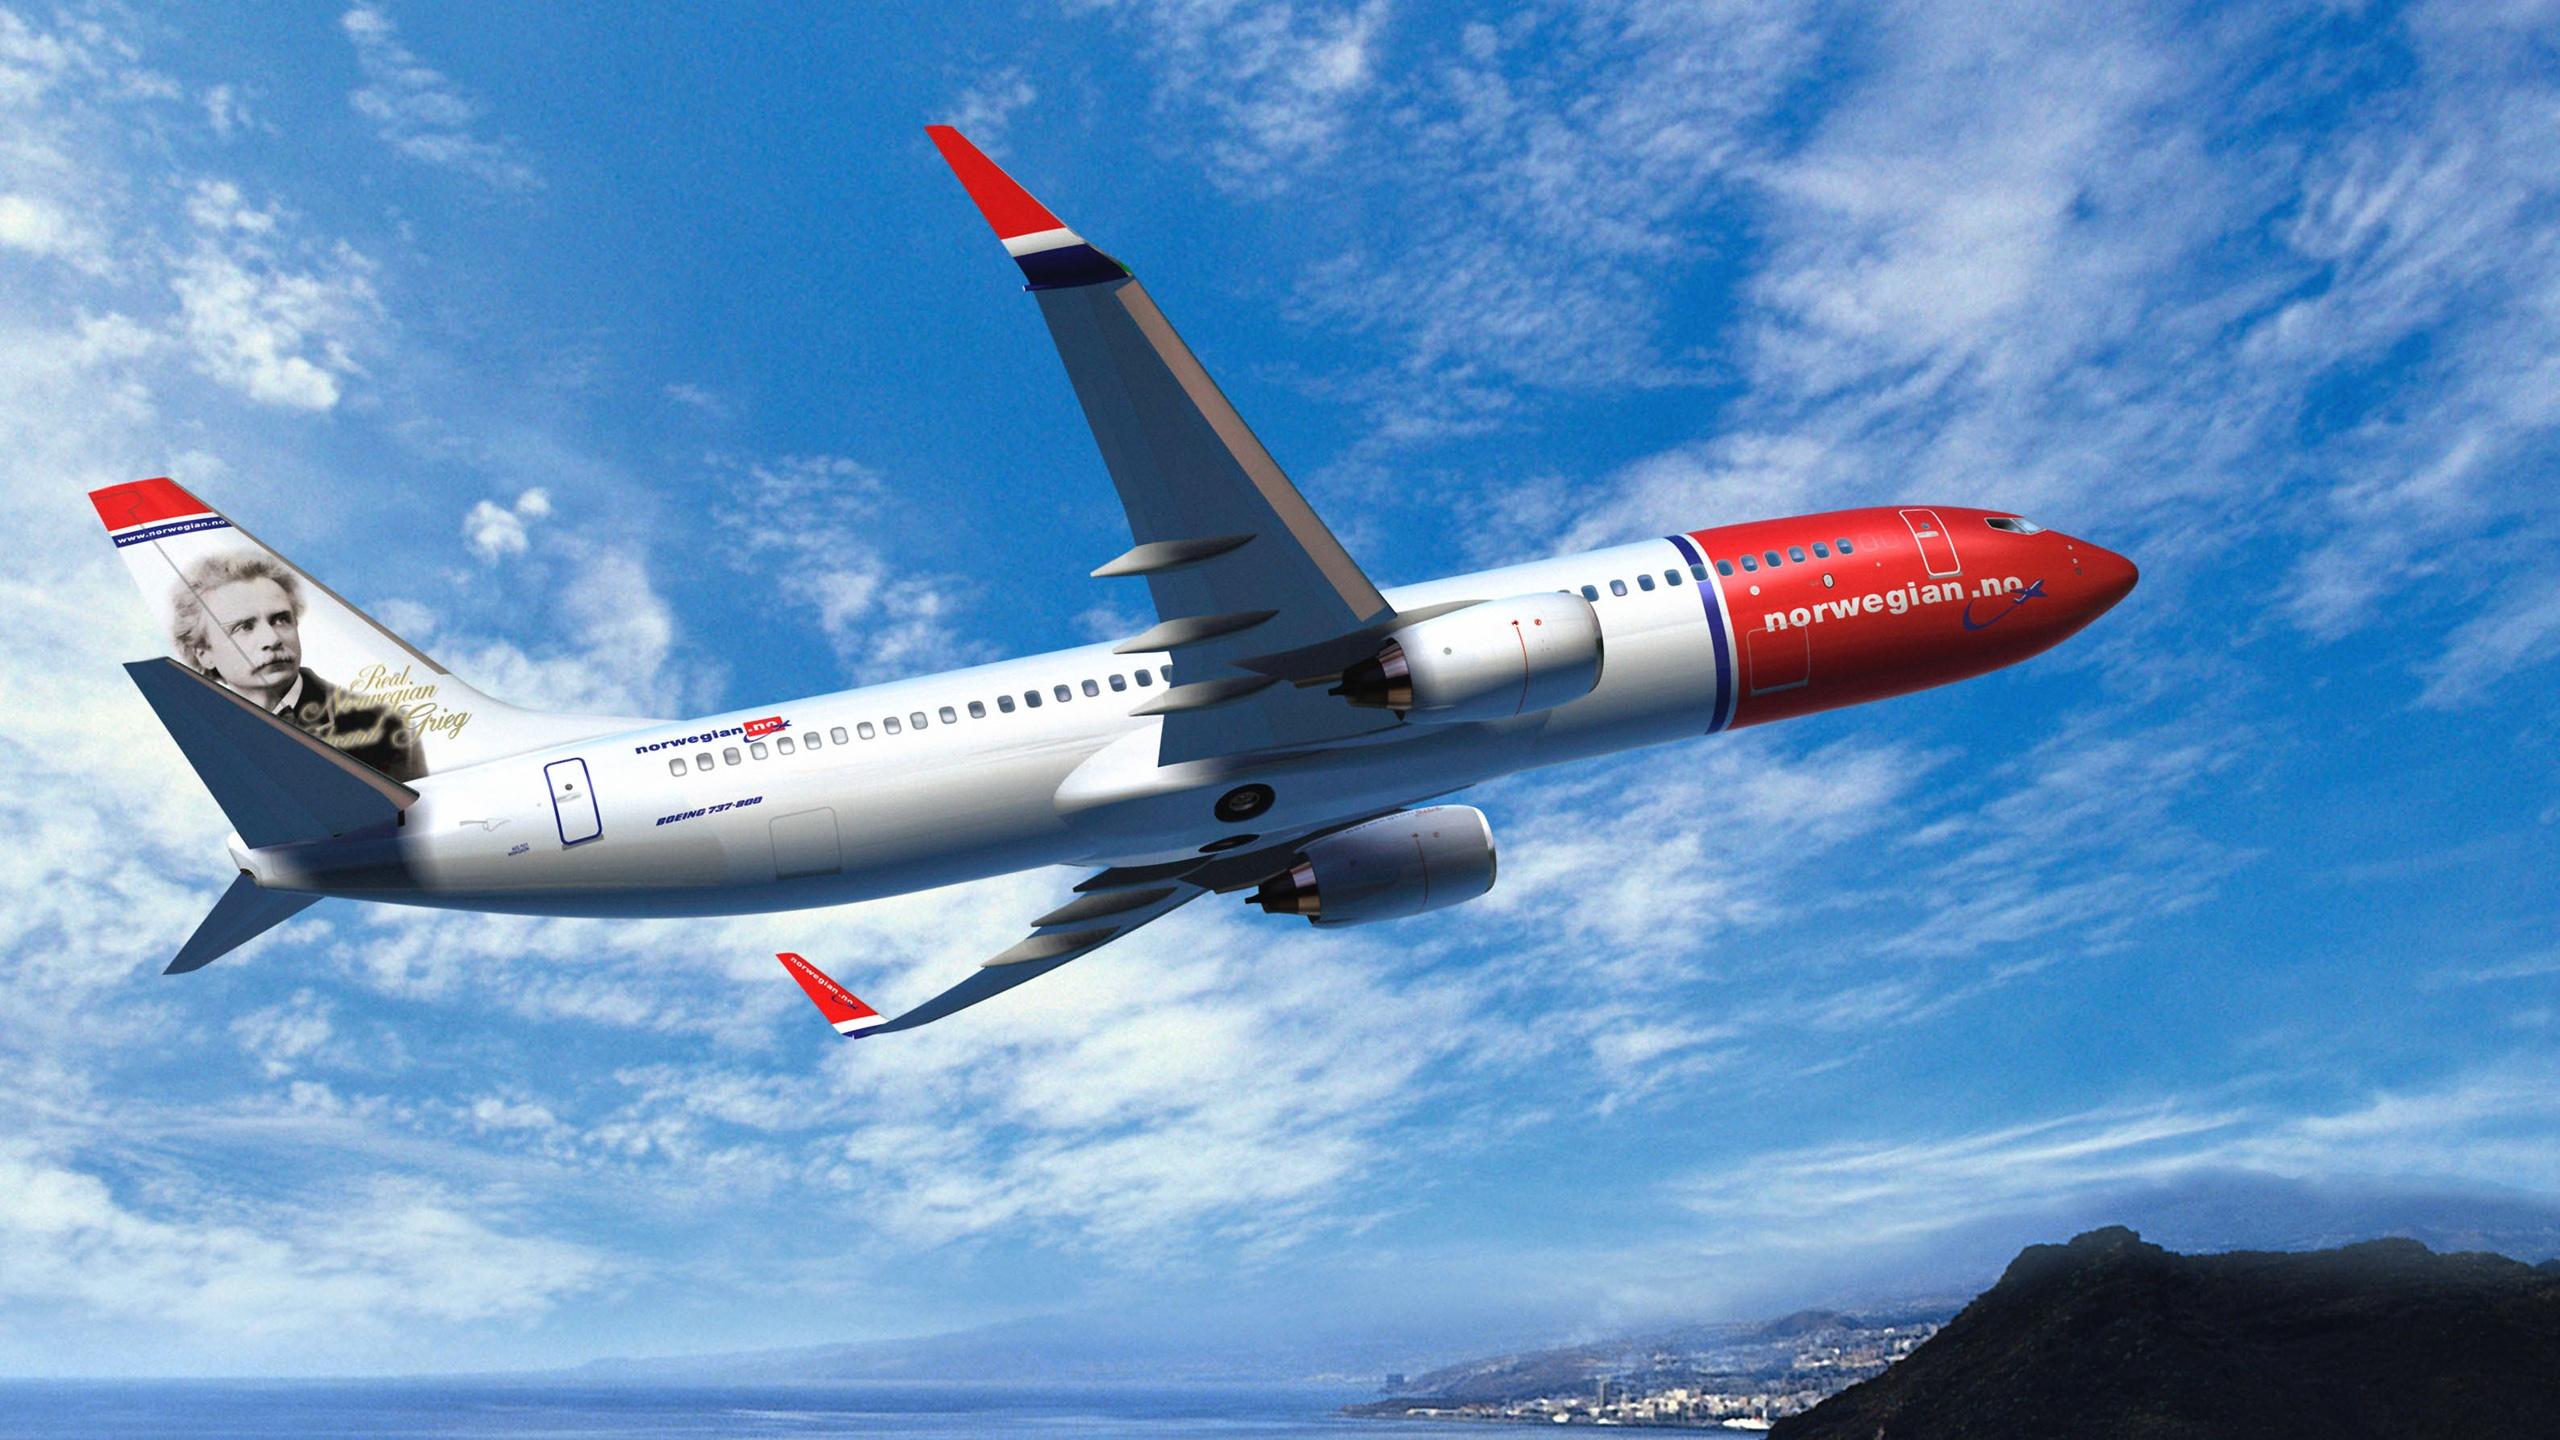 Wallpaper Norwegian Air, Boeing 737 Airplane 2560x1440 QHD Picture